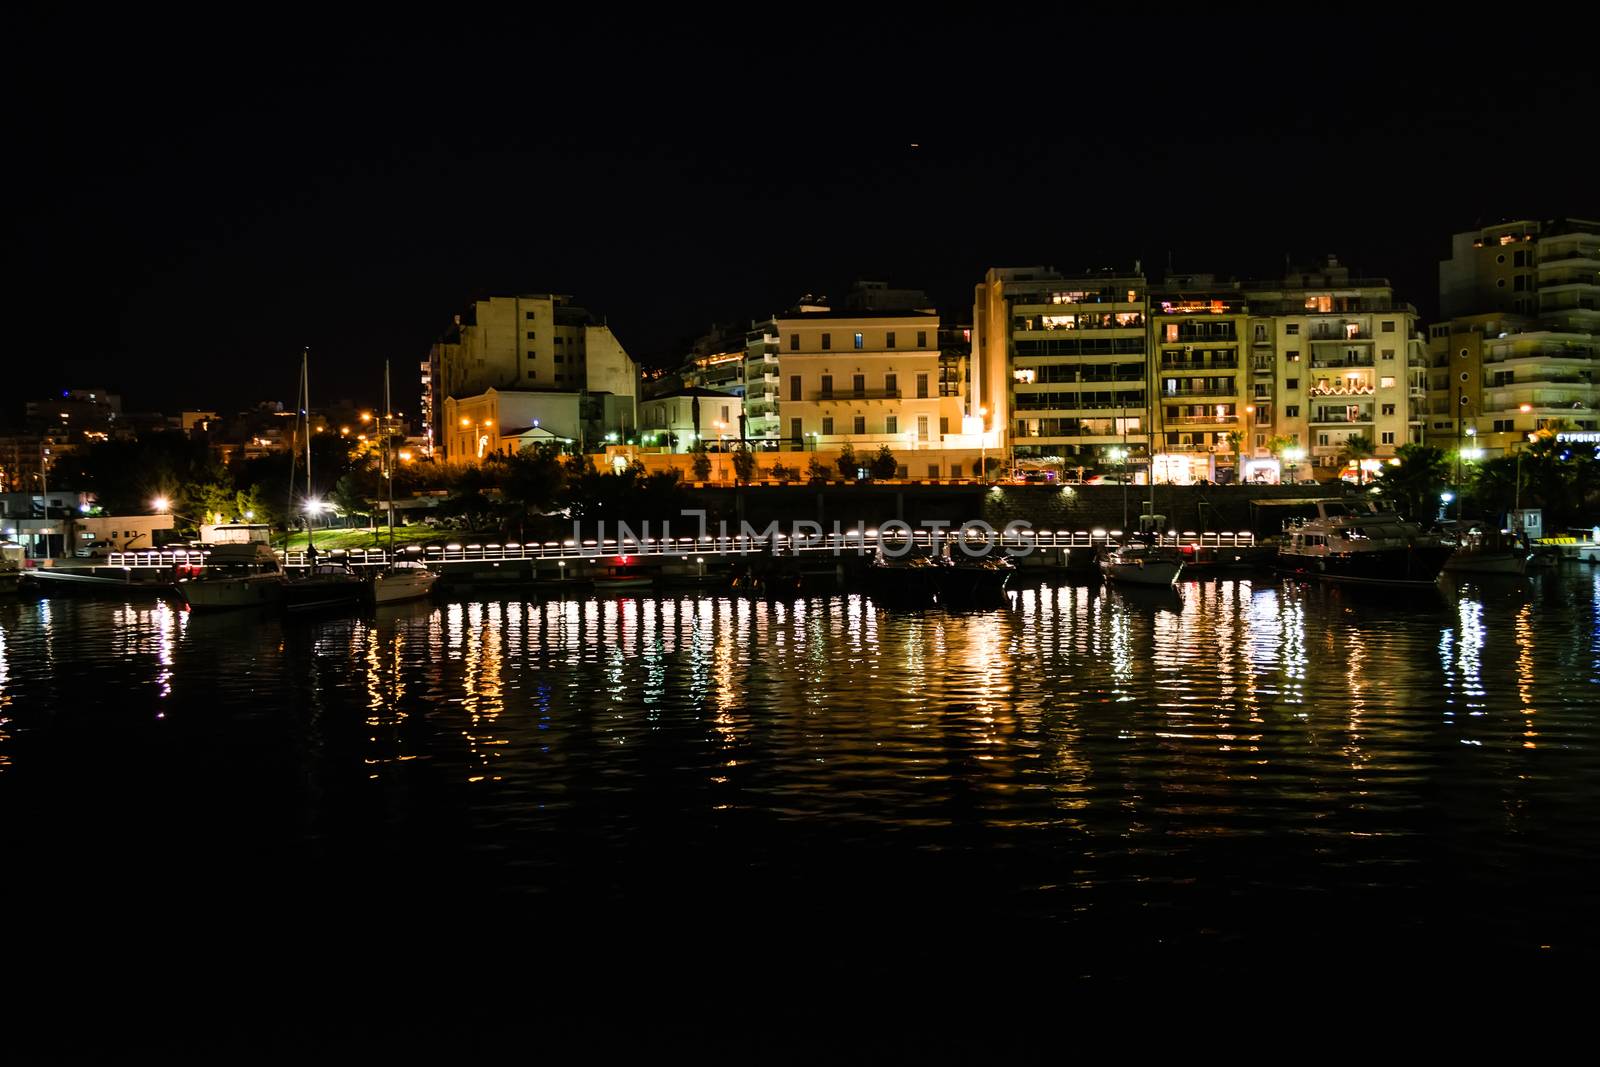 Piraeus Marina port in the night by ankarb